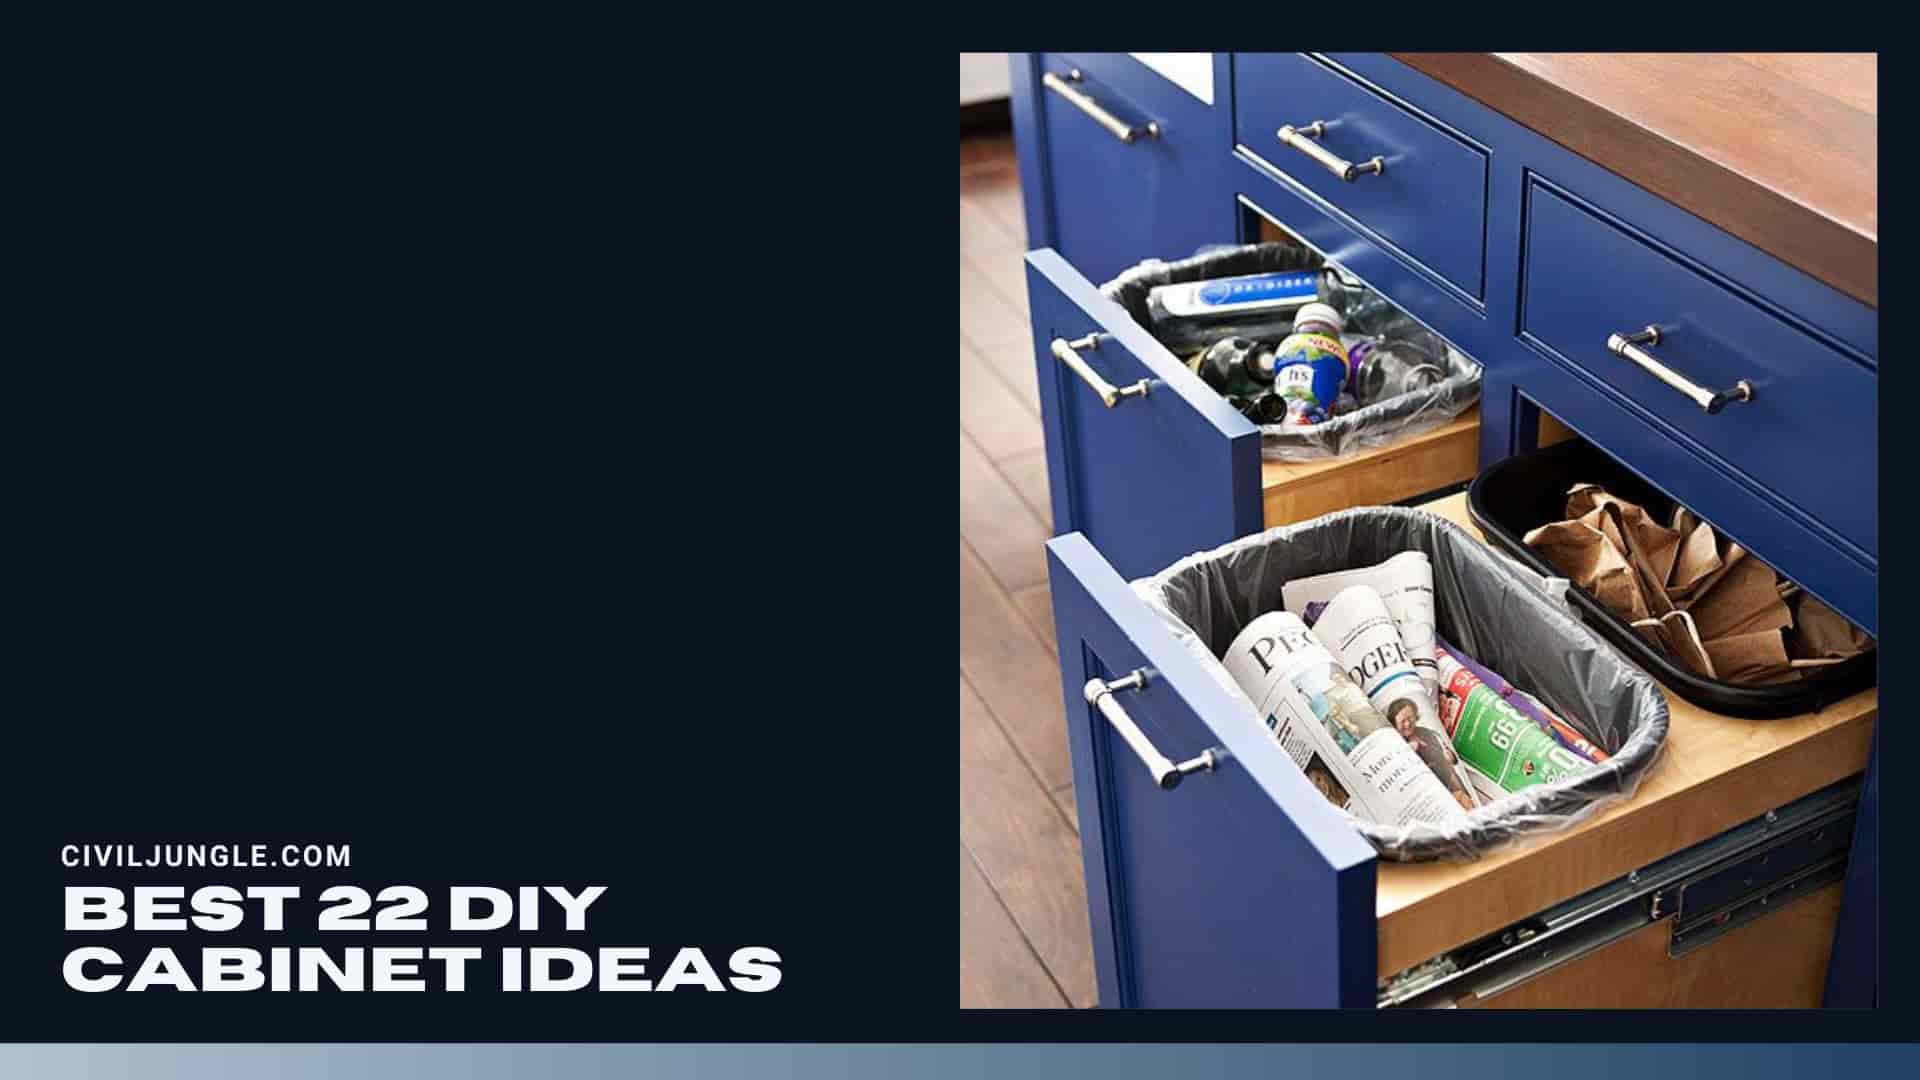 Best 22 Diy Cabinet Ideas